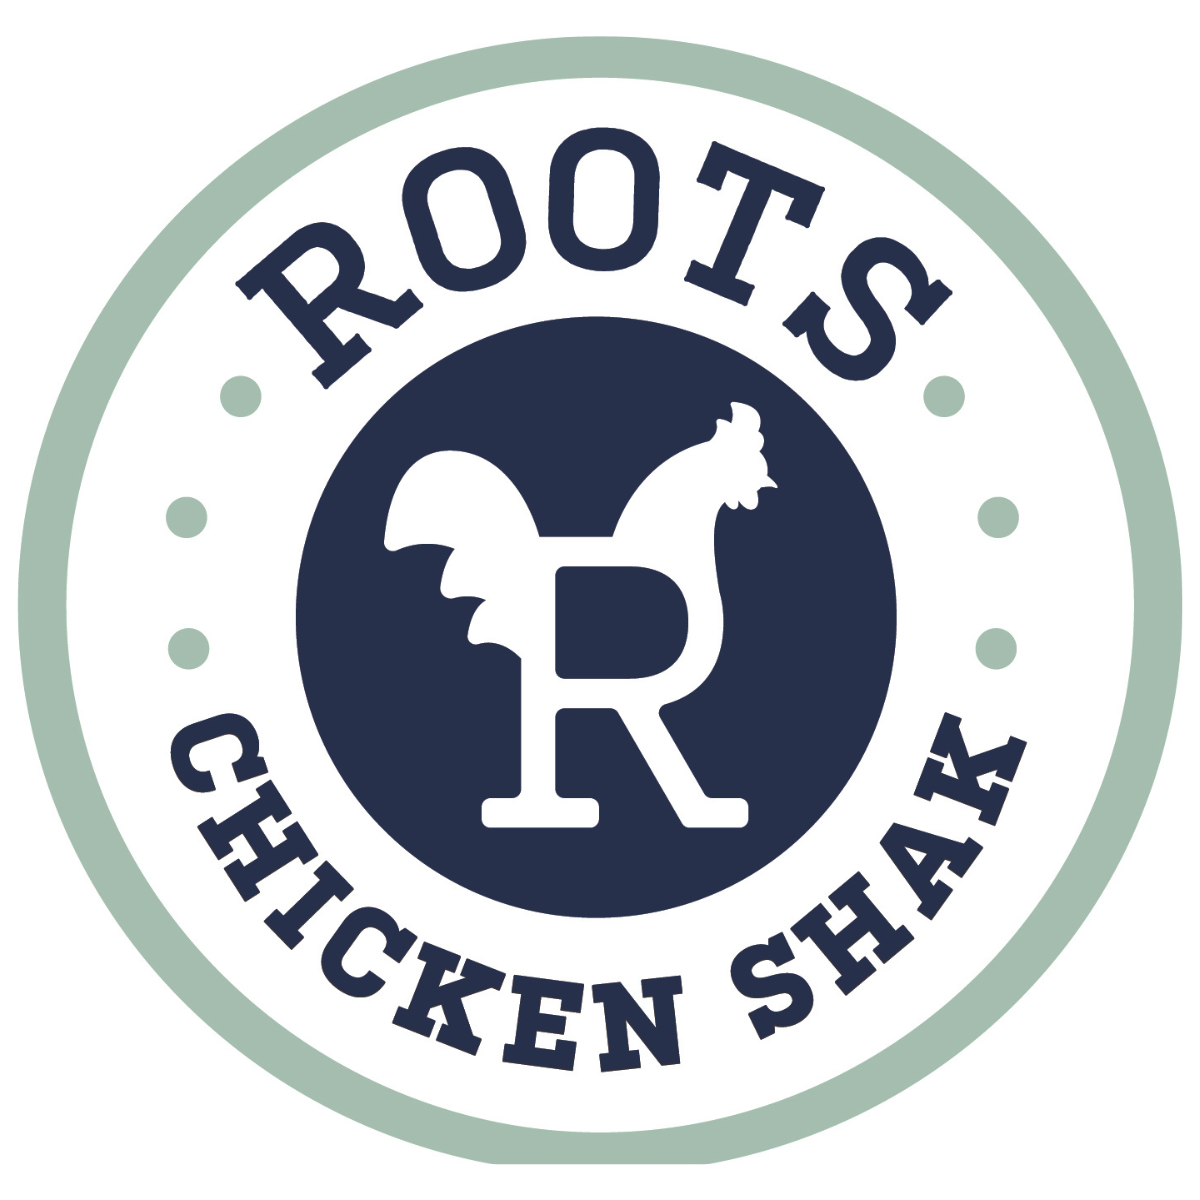 James Beard finalist Tiffany Derry opening a Roots Chicken Shak in DeSoto